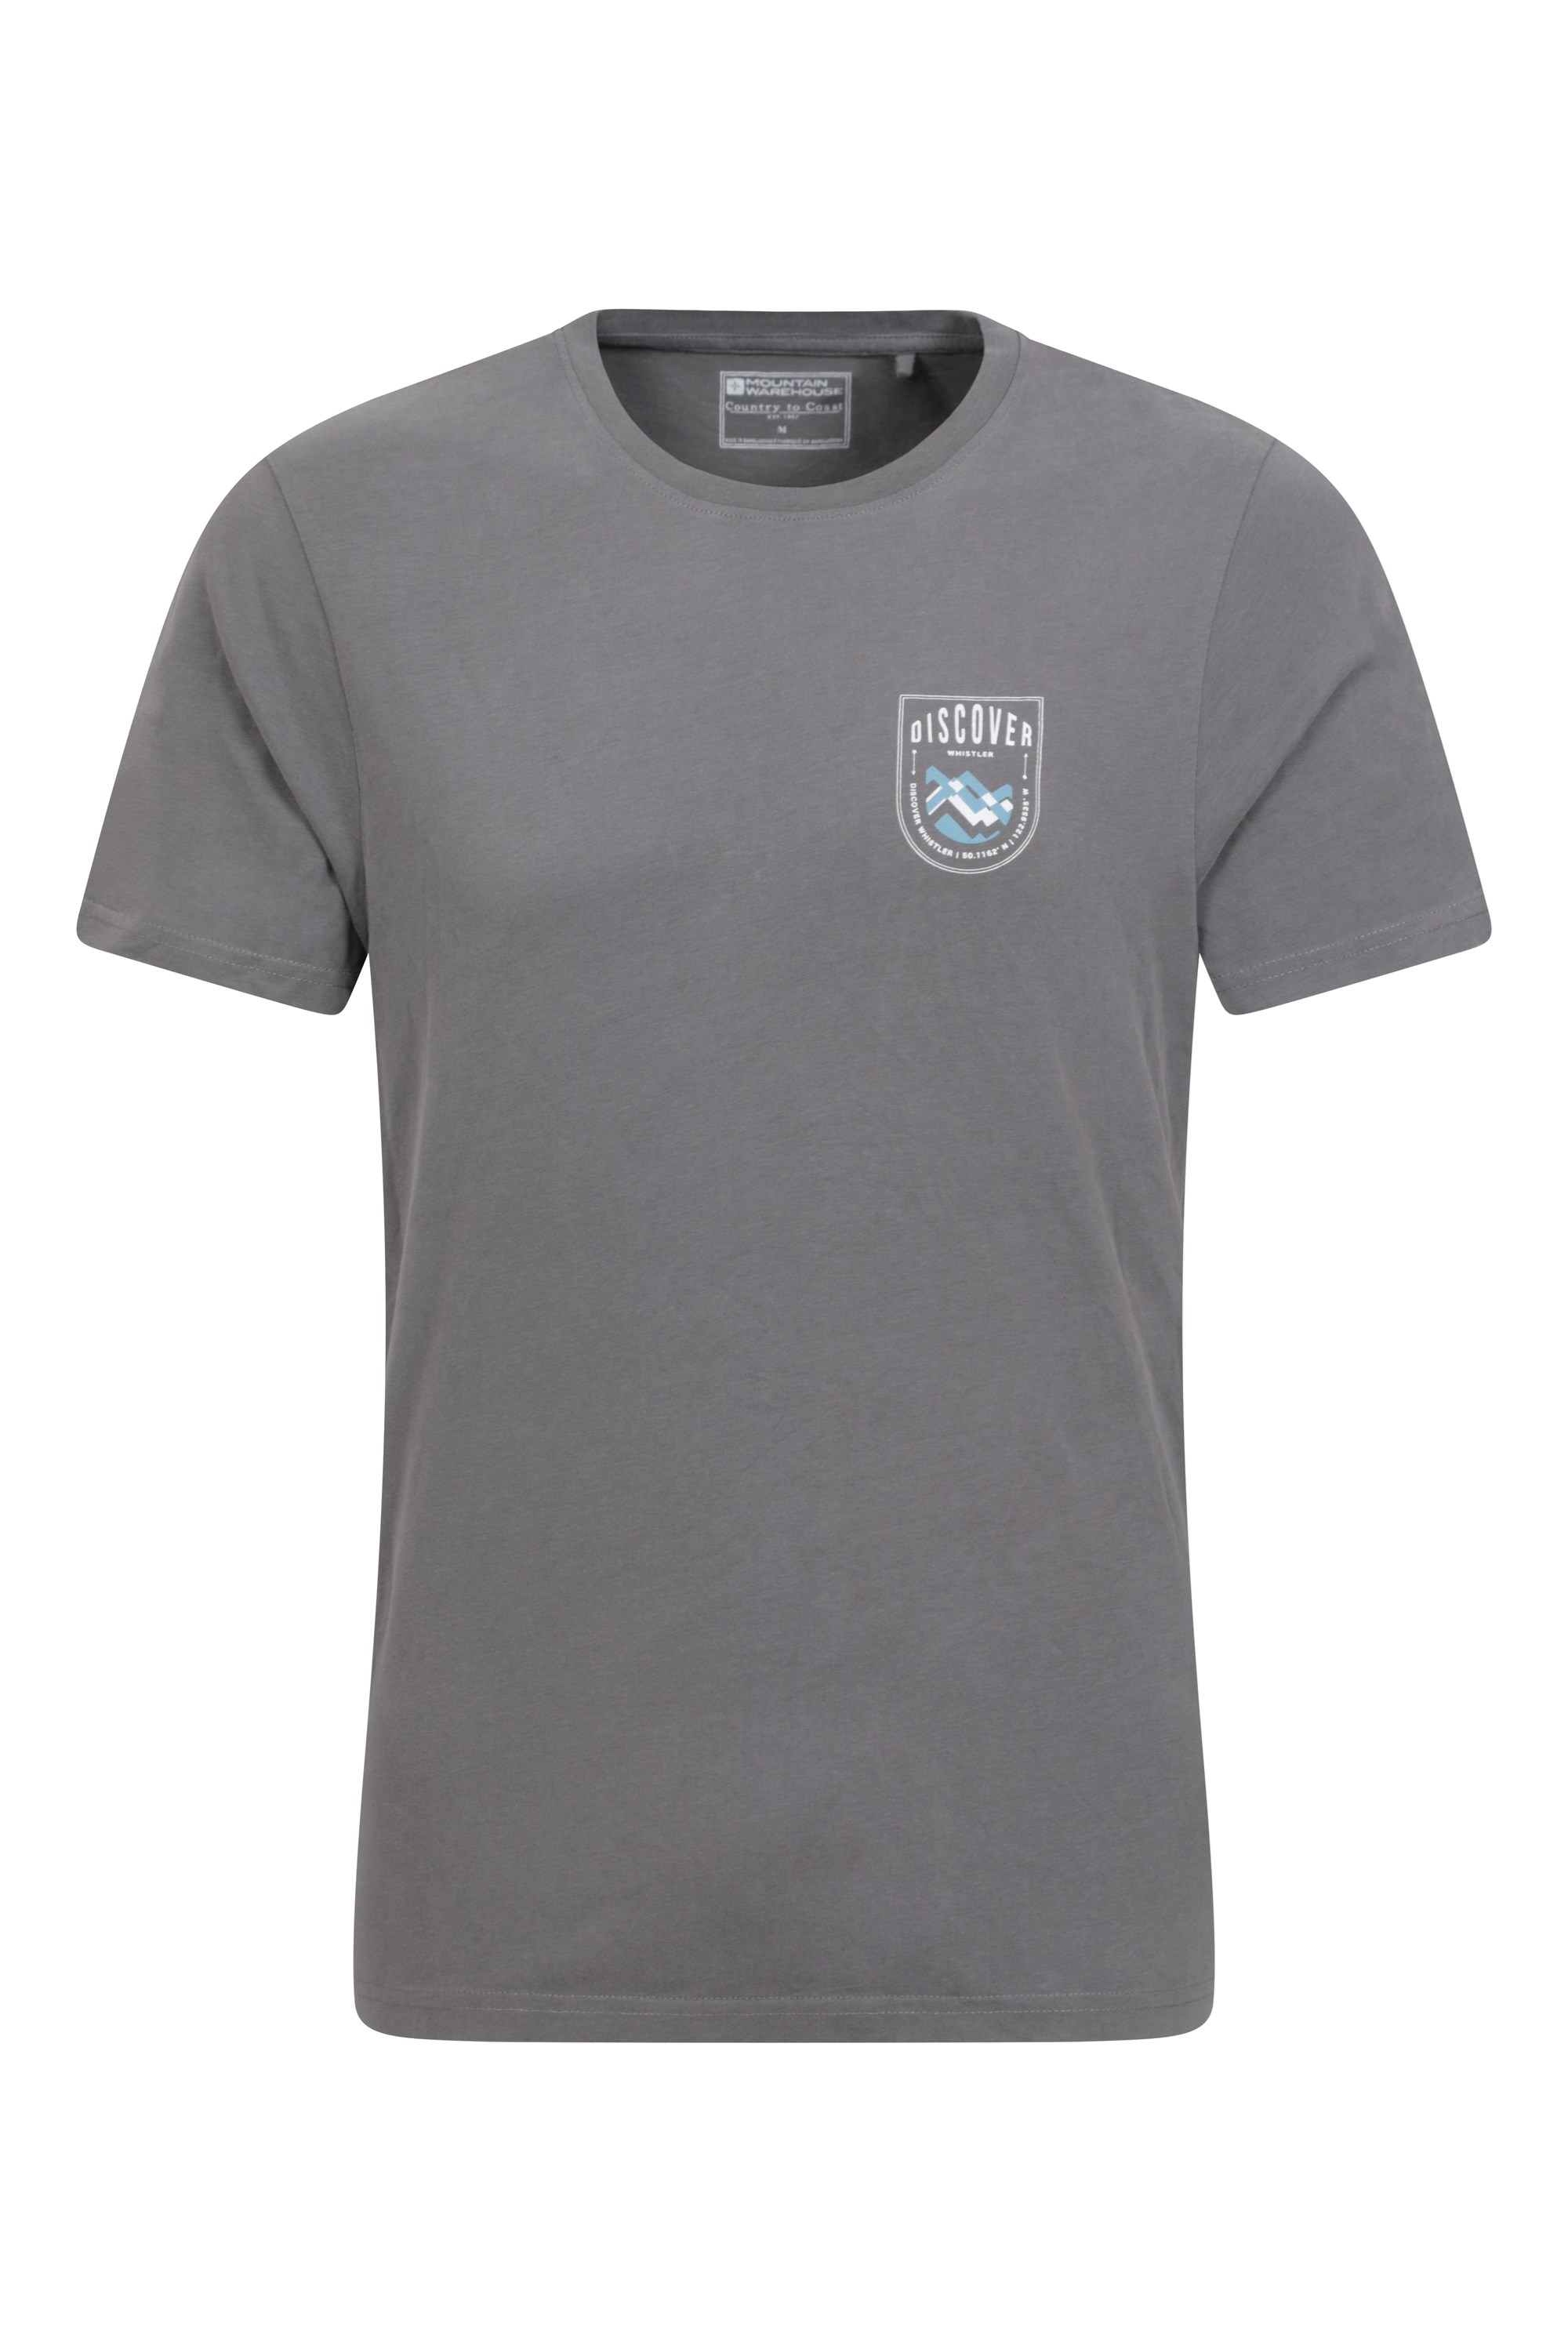 discover whistler organic men's t-shirt - grey